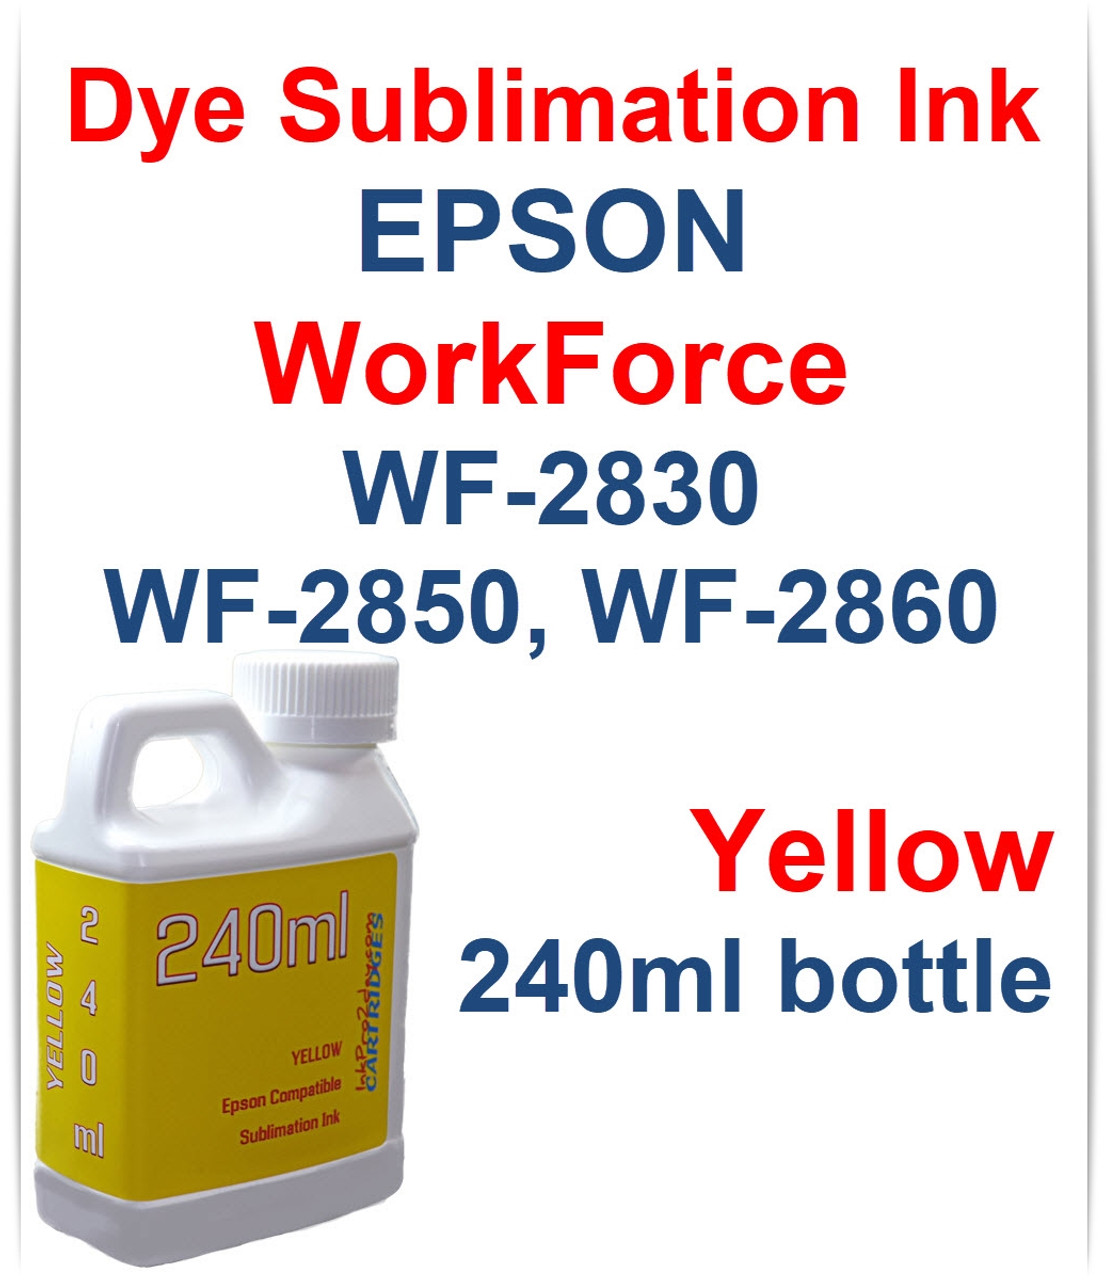 Yellow 240ml bottle Dye Sublimation Ink for Epson WorkForce WF-2830 WF-2850 WF-2860 Printers